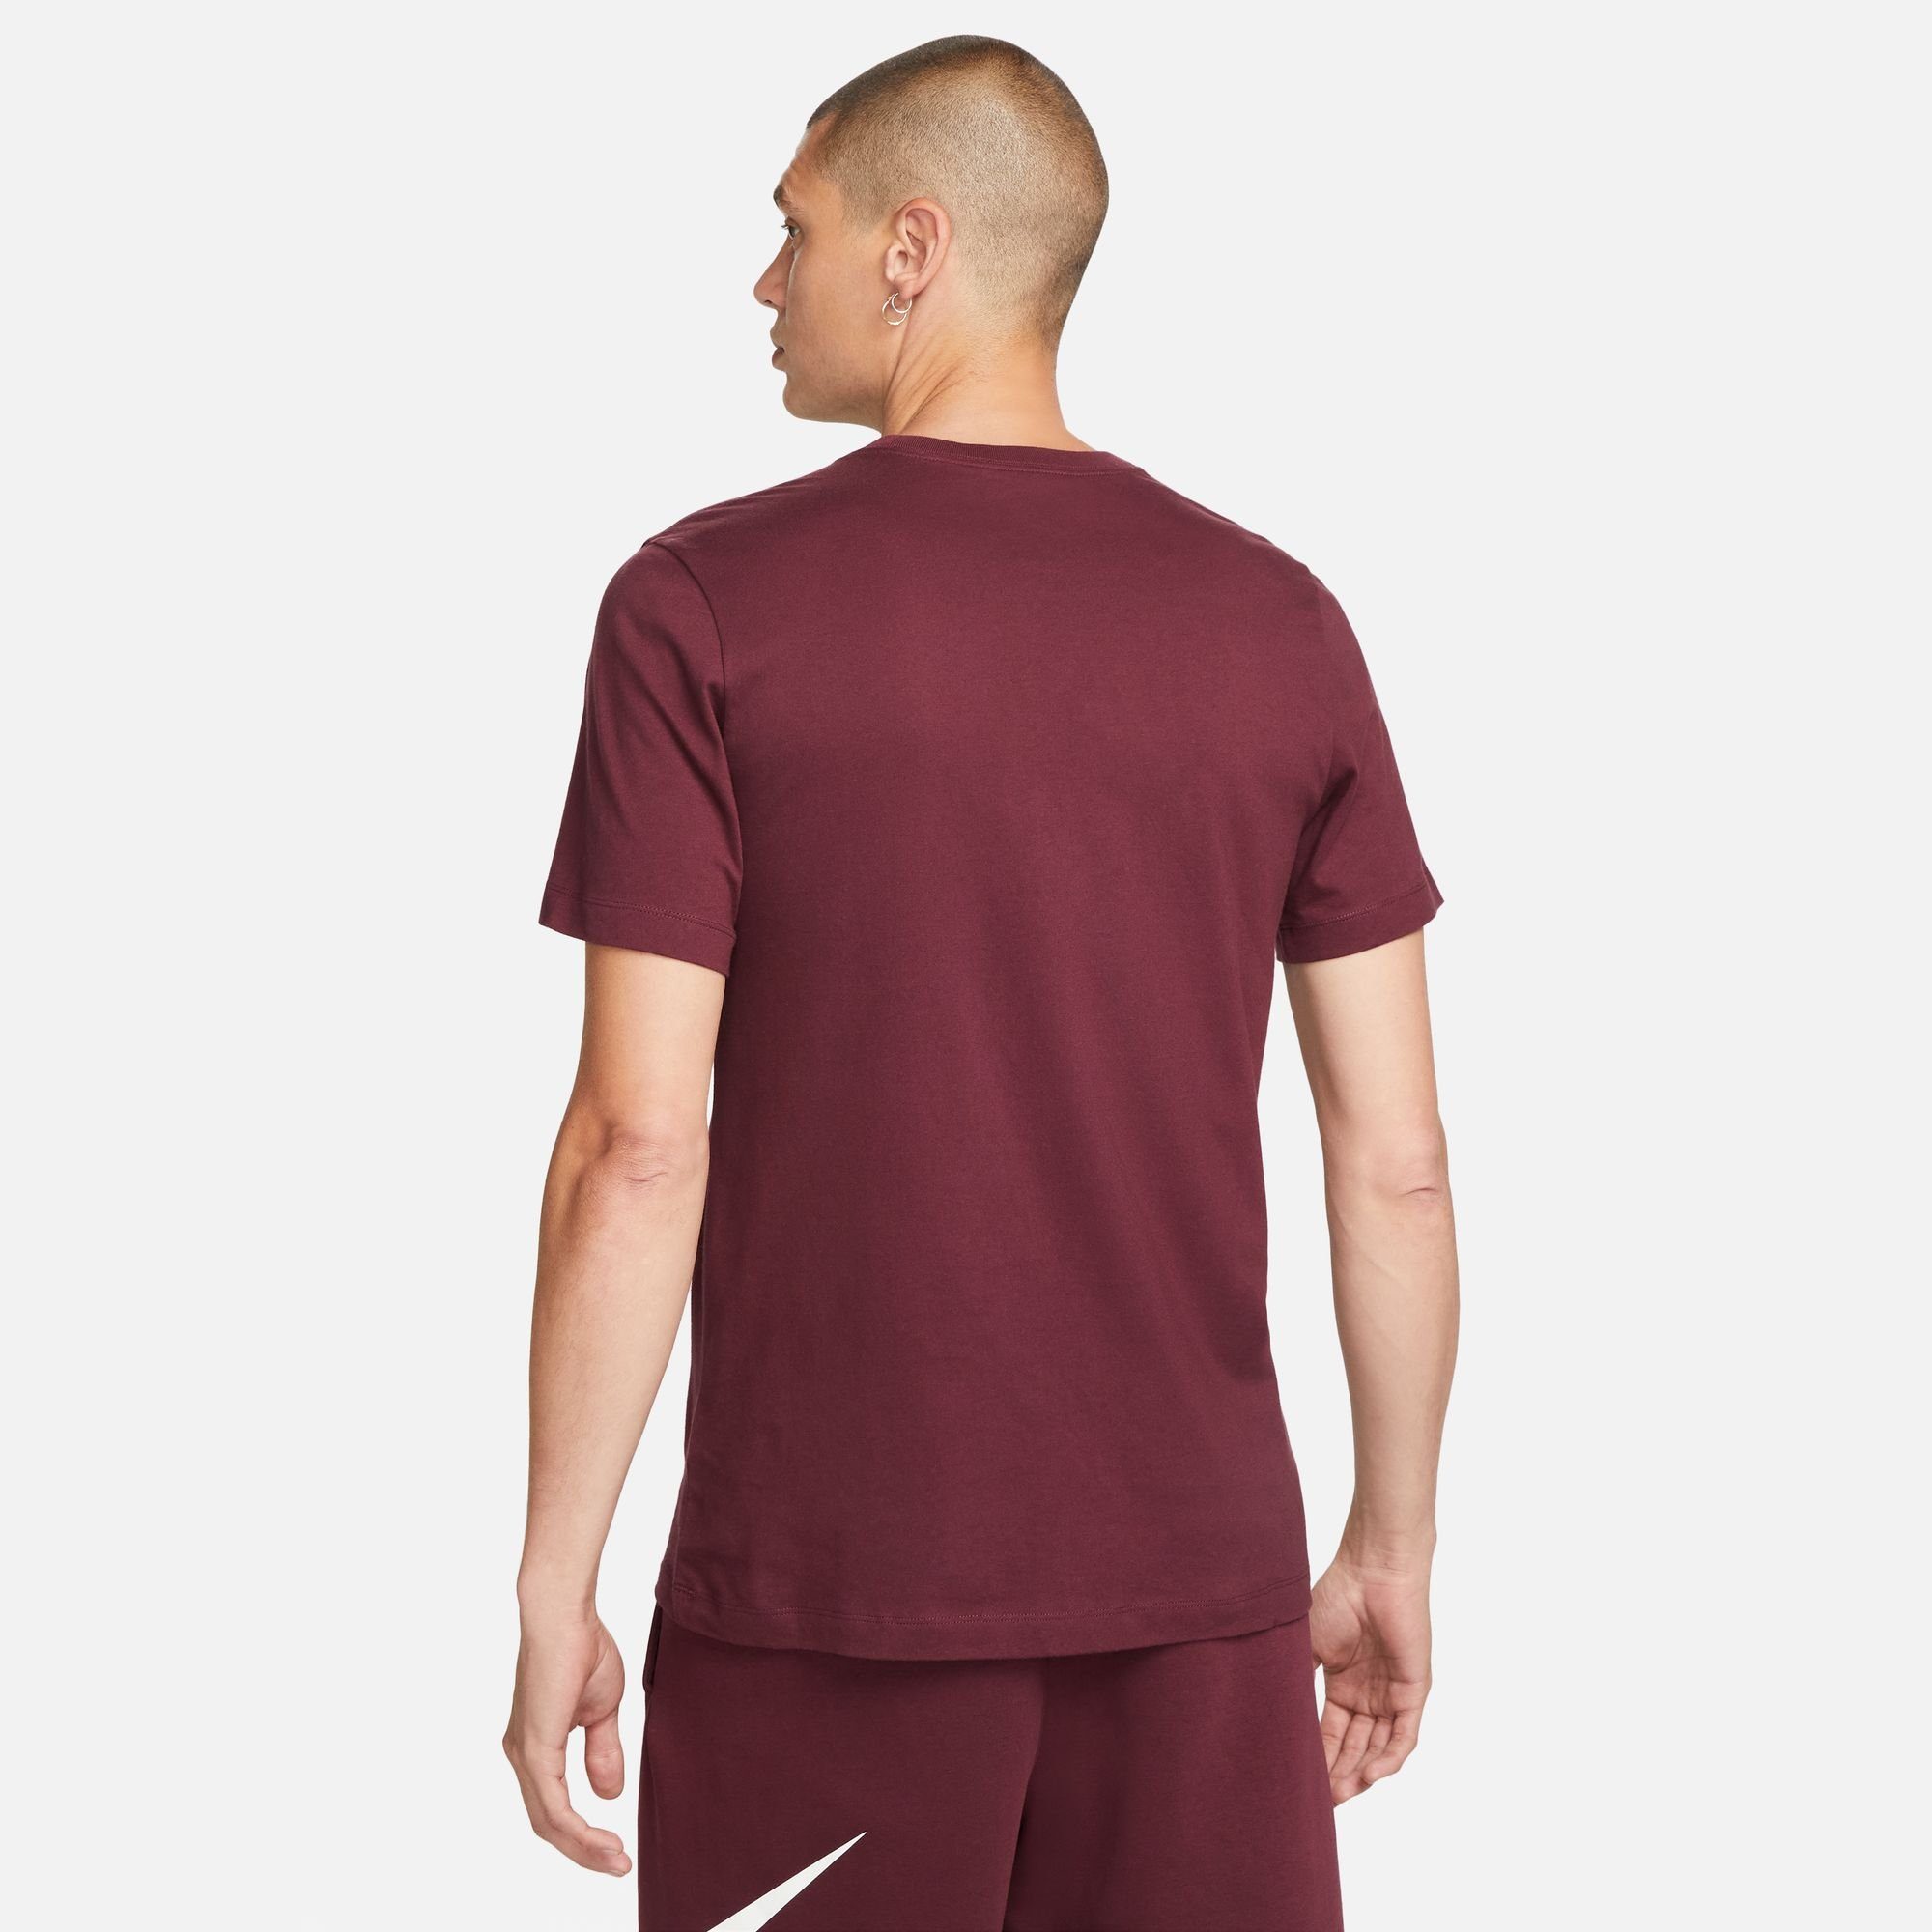 JDI NIGHT MEN'S Sportswear T-SHIRT MAROON T-Shirt Nike